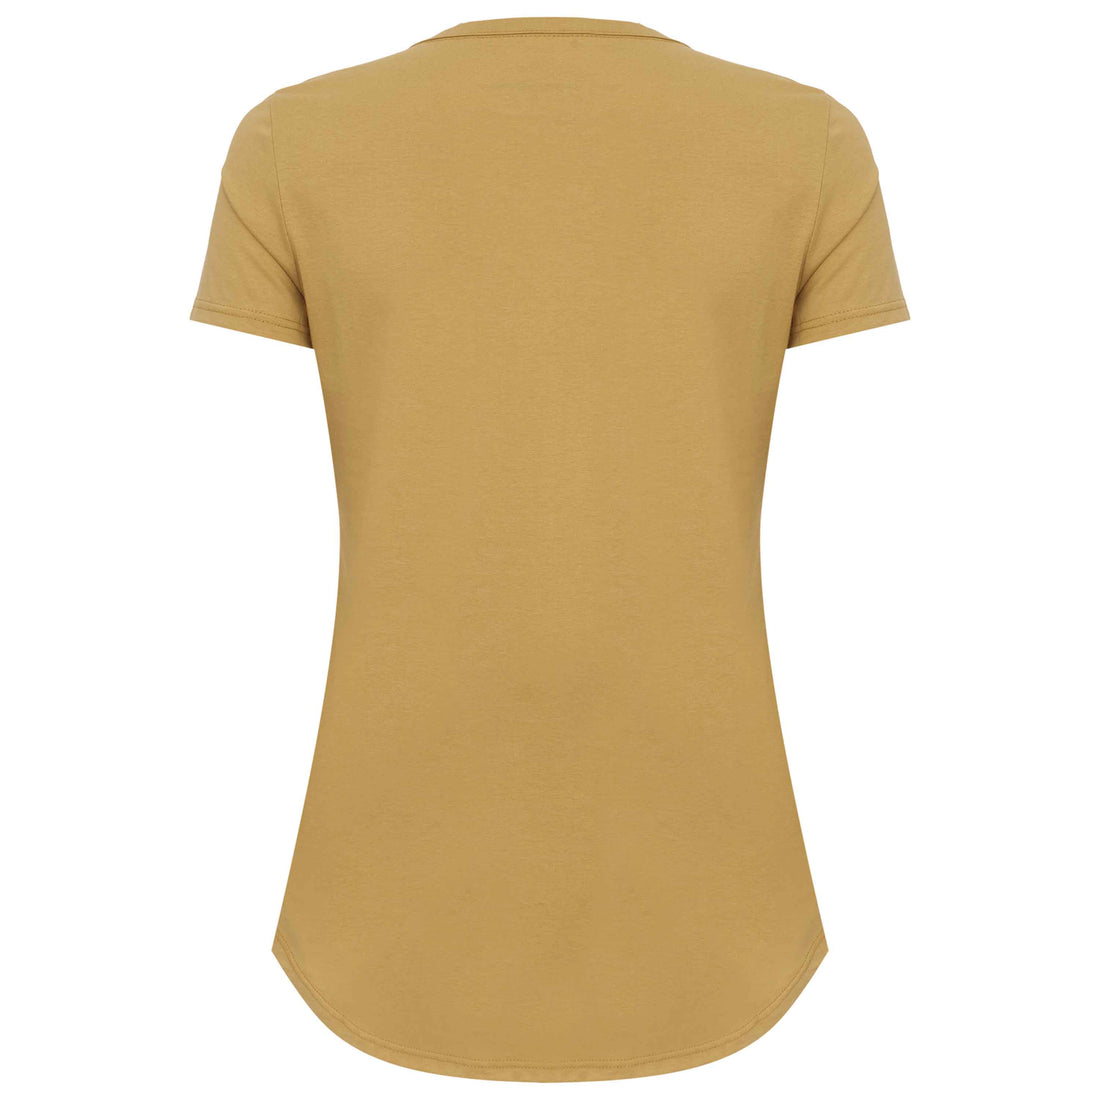 Camiseta Alongada Algodão Premium Feminina - Amarelo Mel